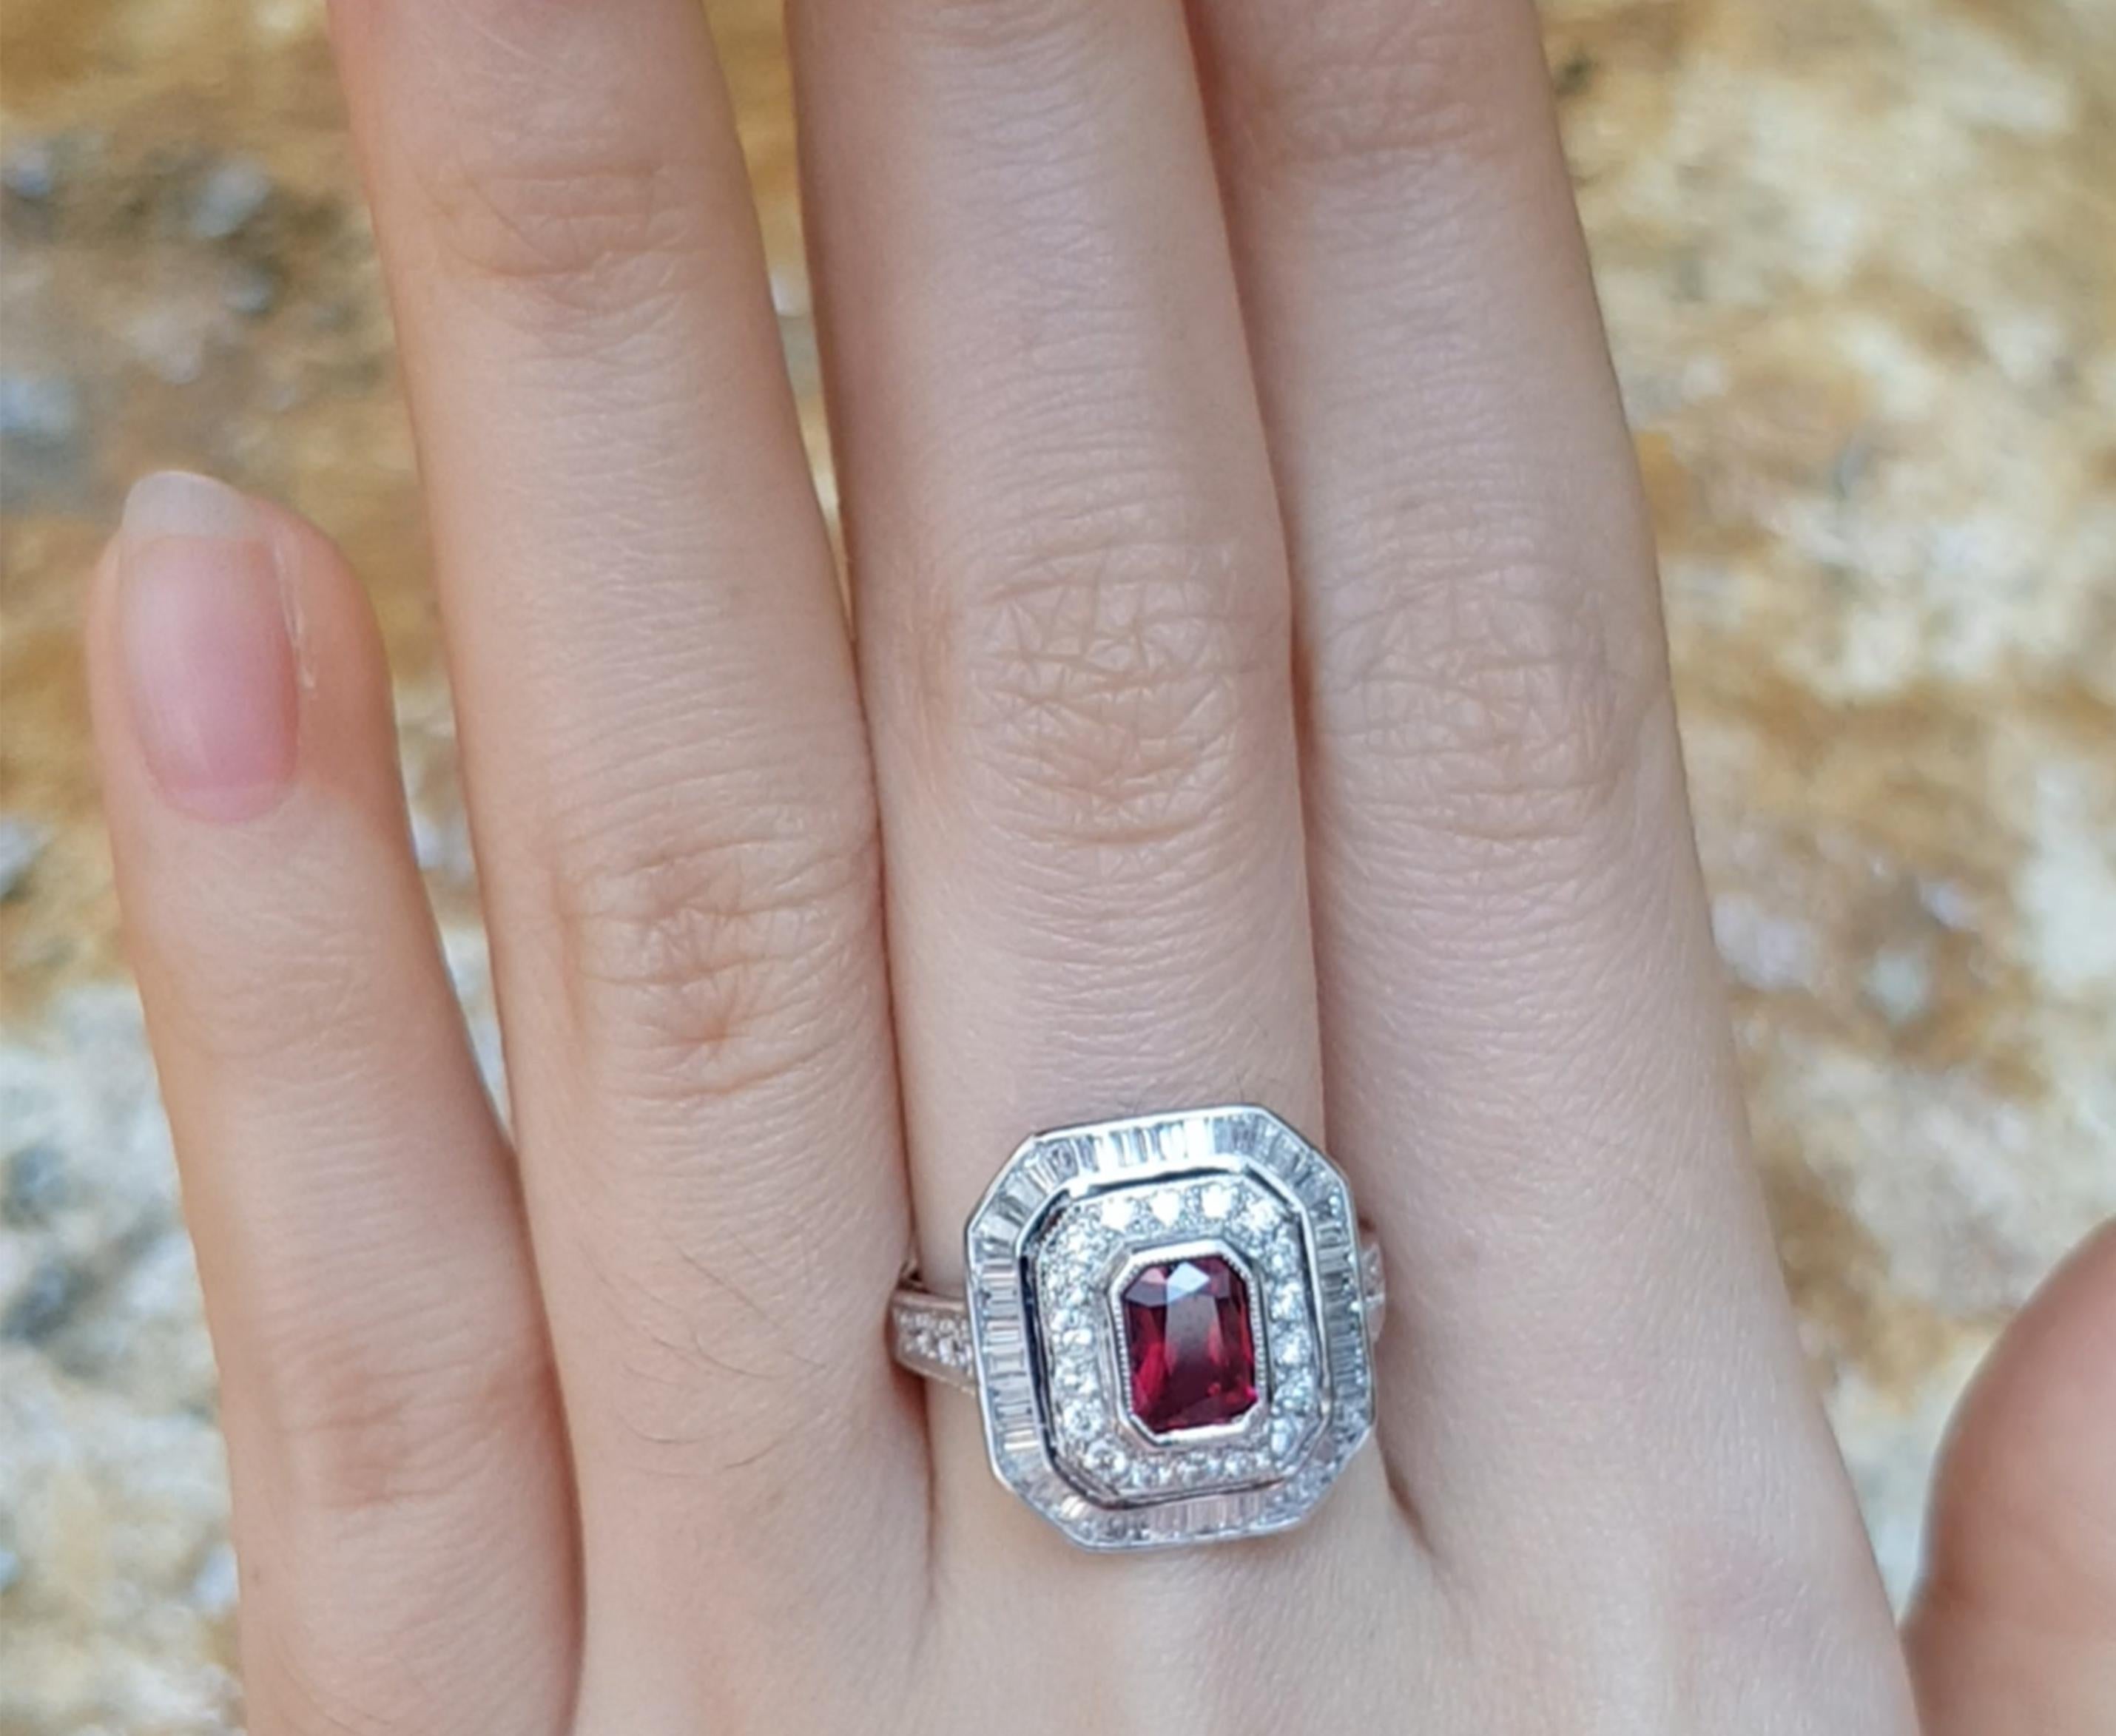 Ruby 0.85 carat with Diamond 0.54 carat Ring set in 18 Karat White Gold Settings

Width:  1.5 cm 
Length: 1.7 cm
Ring Size: 54
Total Weight: 5.51 grams

